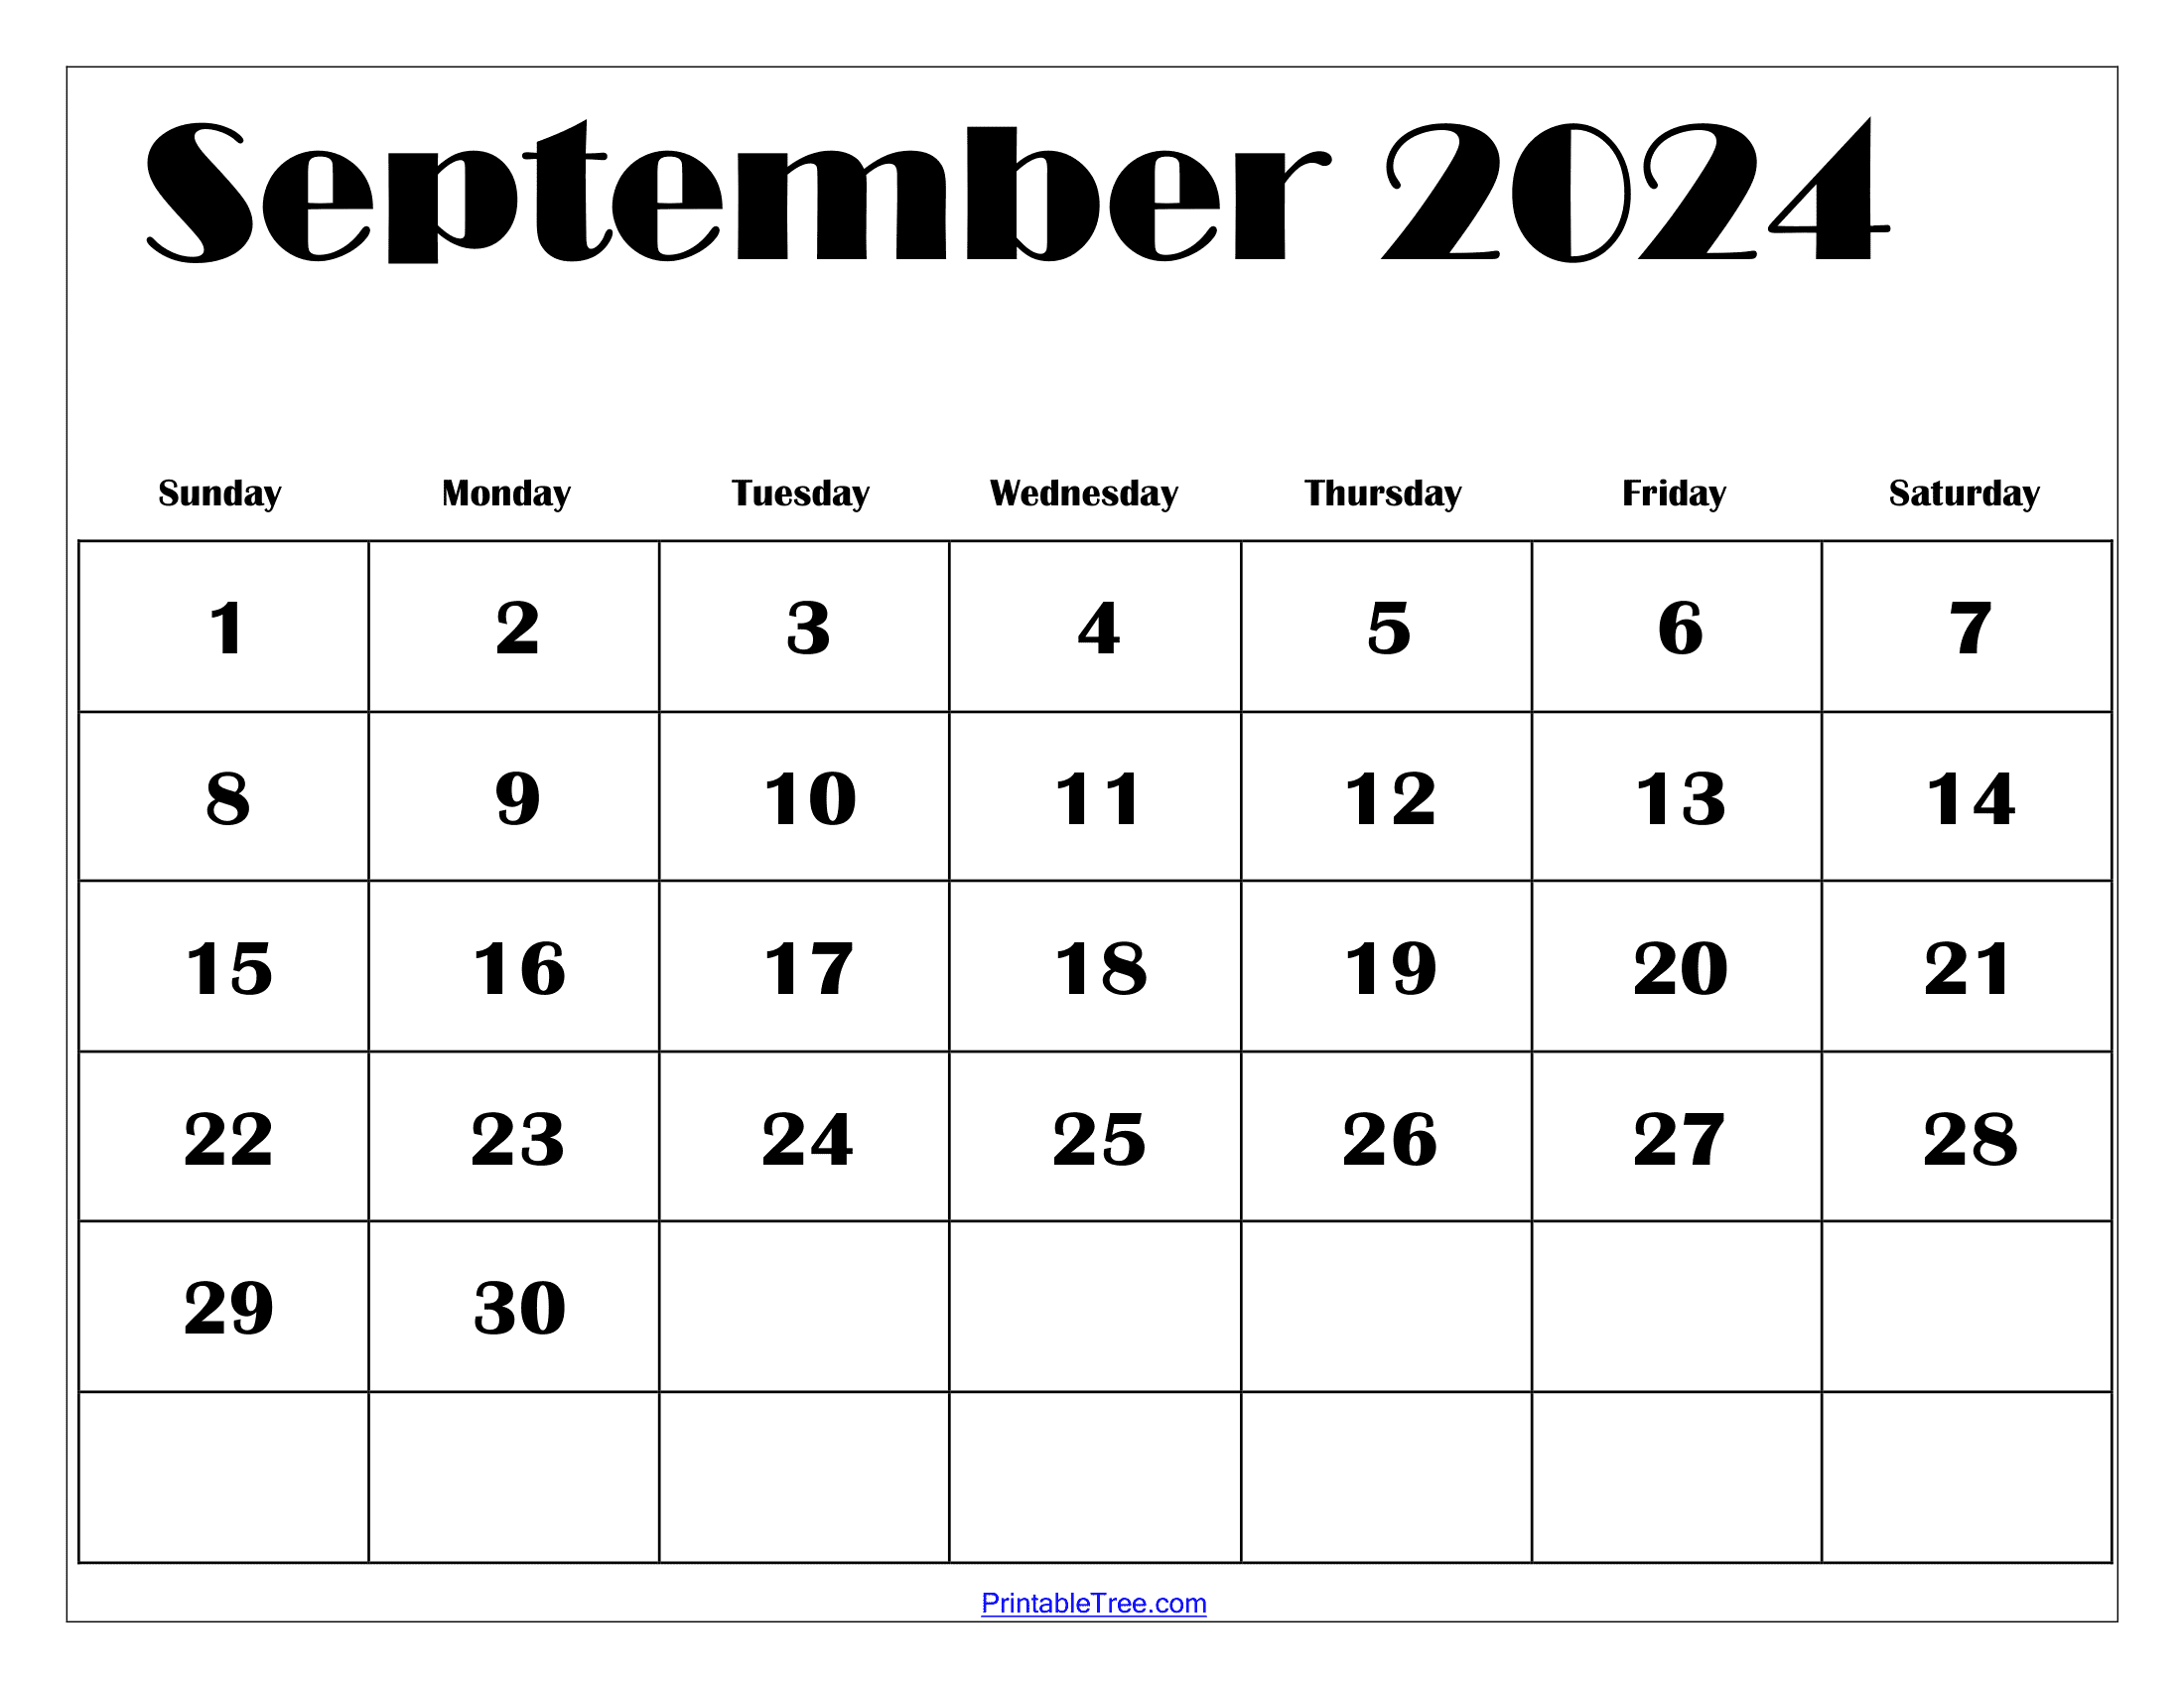 September 2024 Calendar Printable Pdf With Holidays for Calendar September 2024 Printable